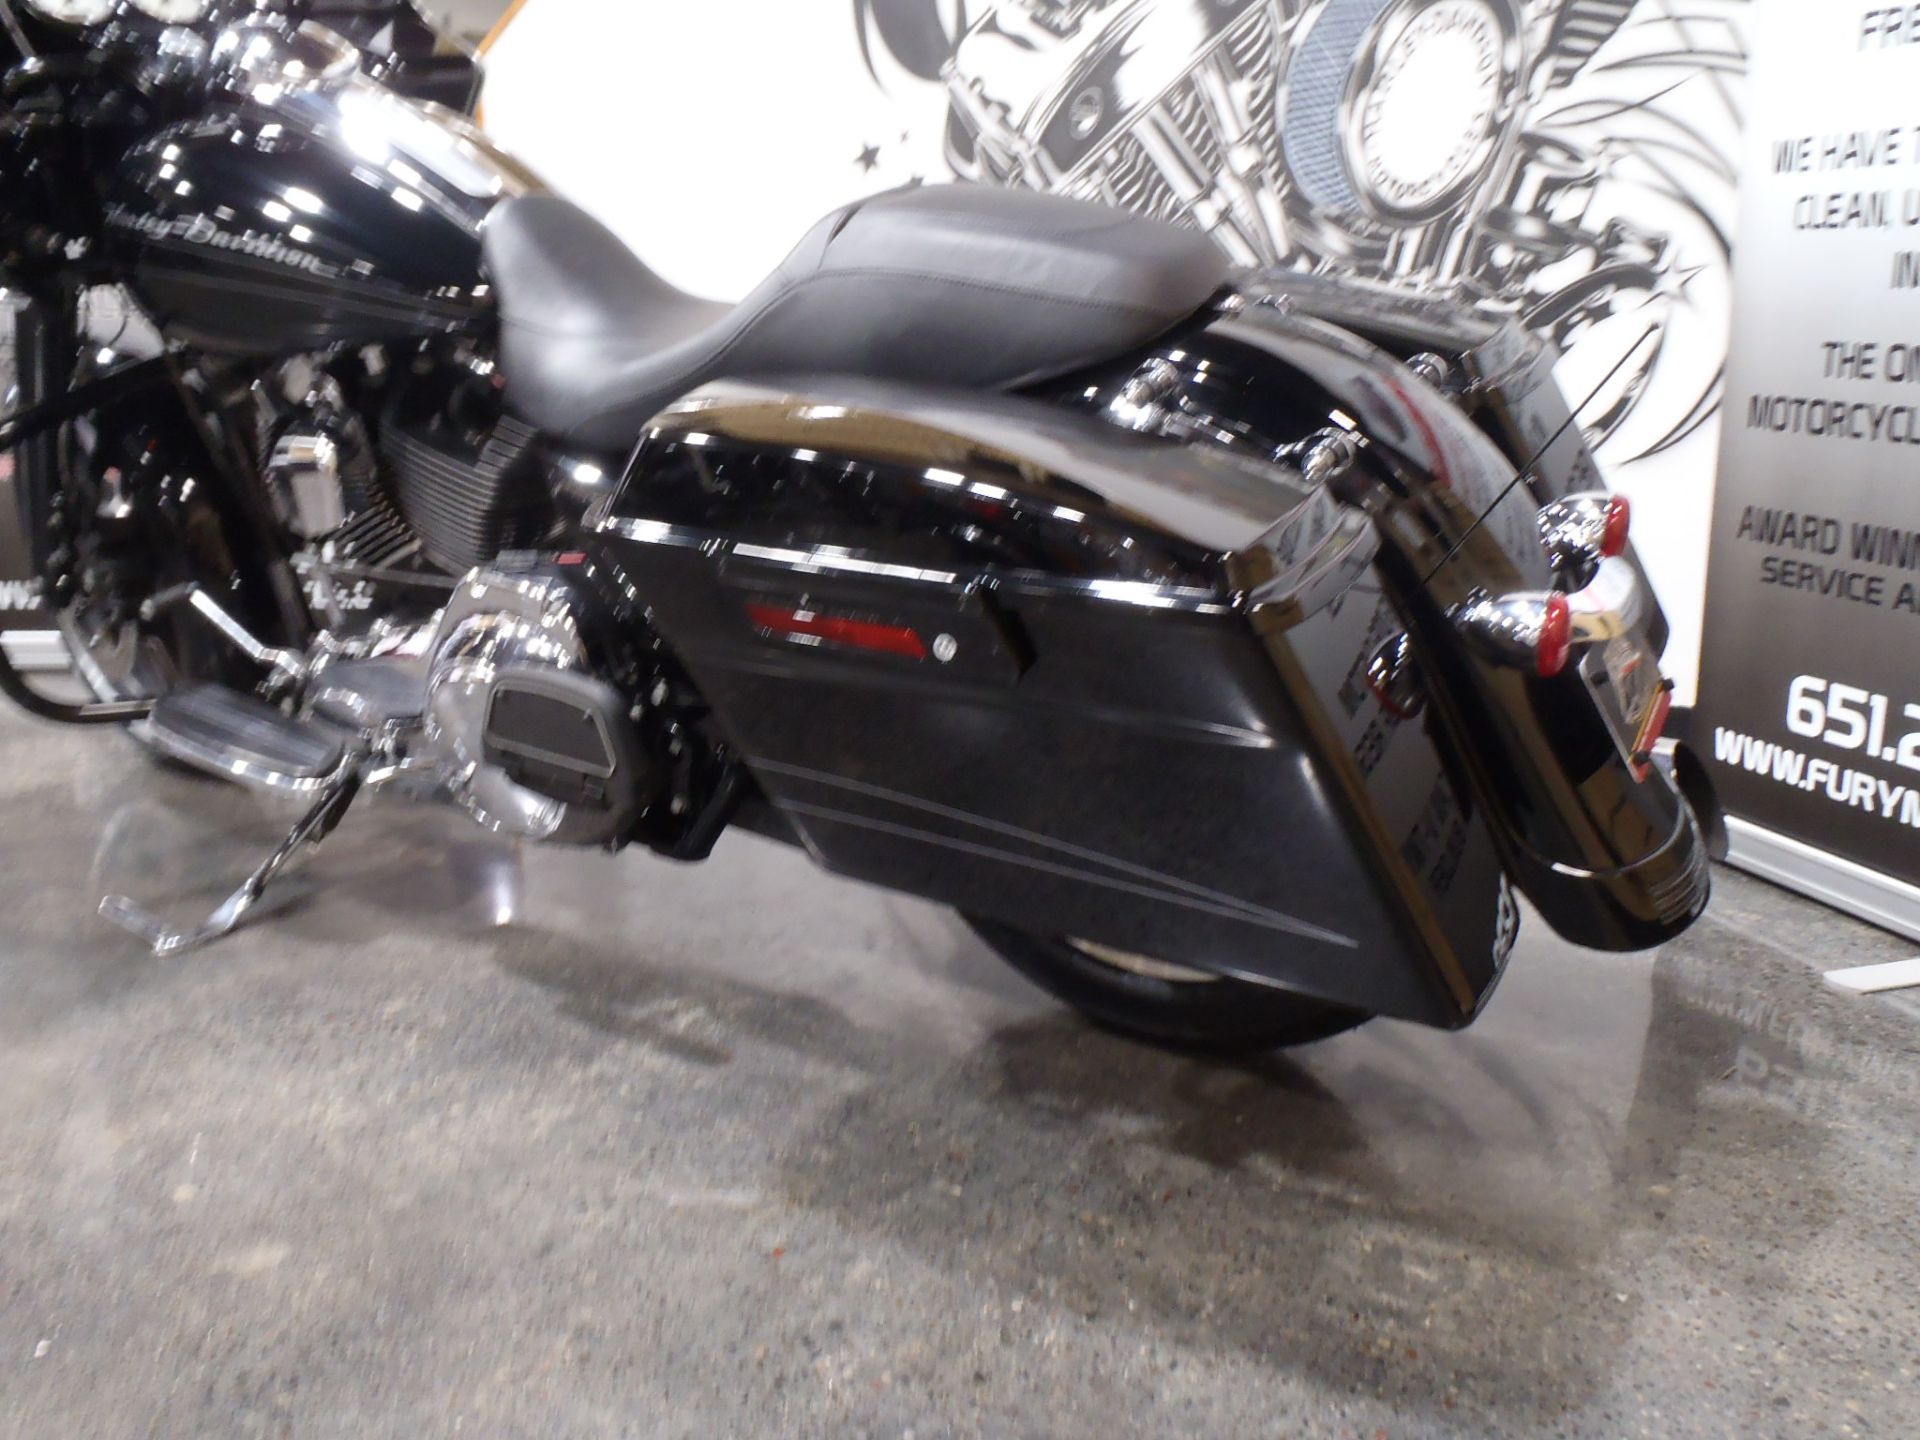 2011 Harley-Davidson Road Glide® Custom in South Saint Paul, Minnesota - Photo 12